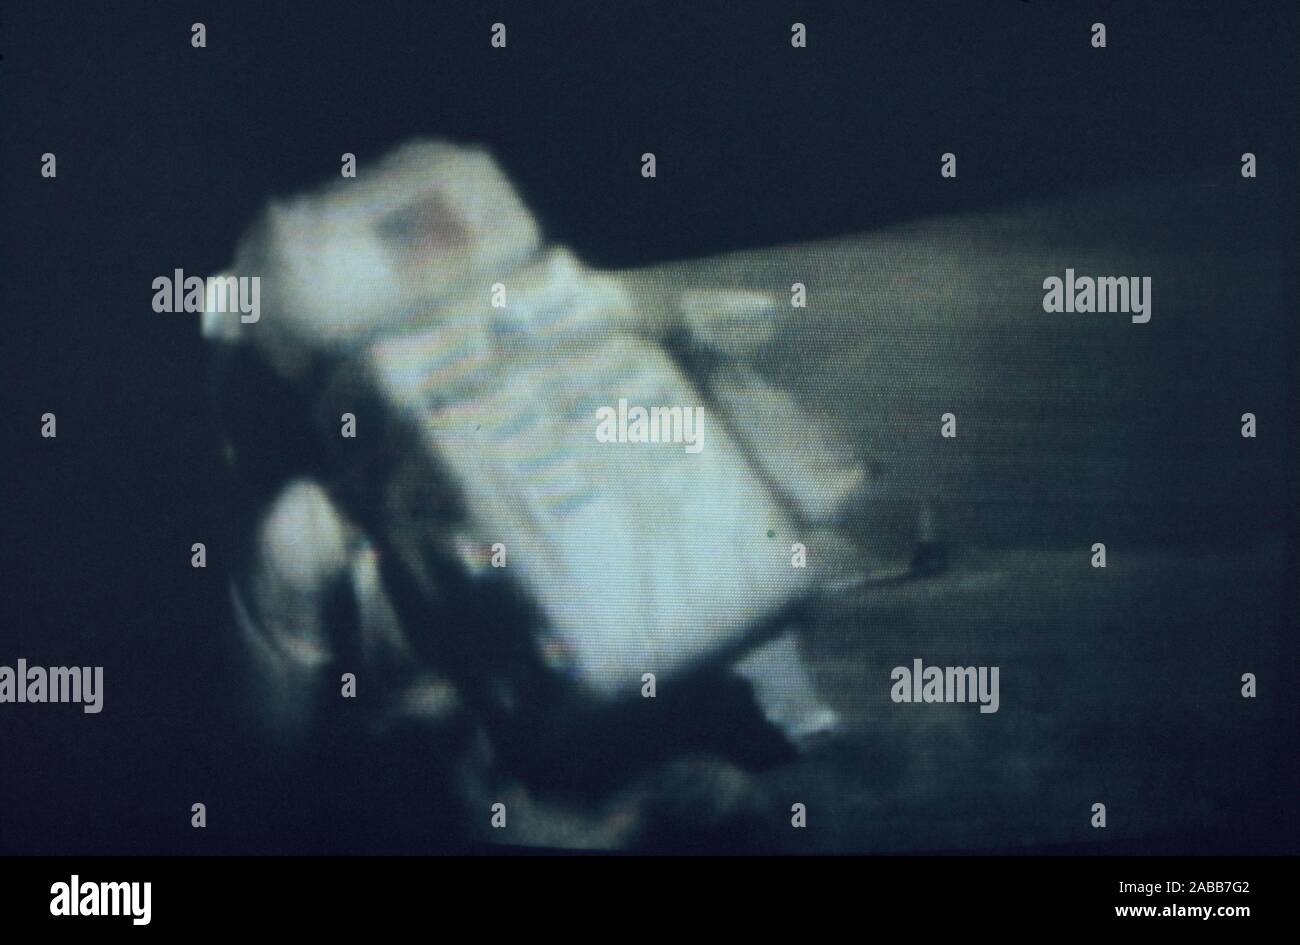 Teleclip - Buzz Aldrin Stumbling on Moon surface - photo taken directly from TV screen circa 1969-72 Stock Photo